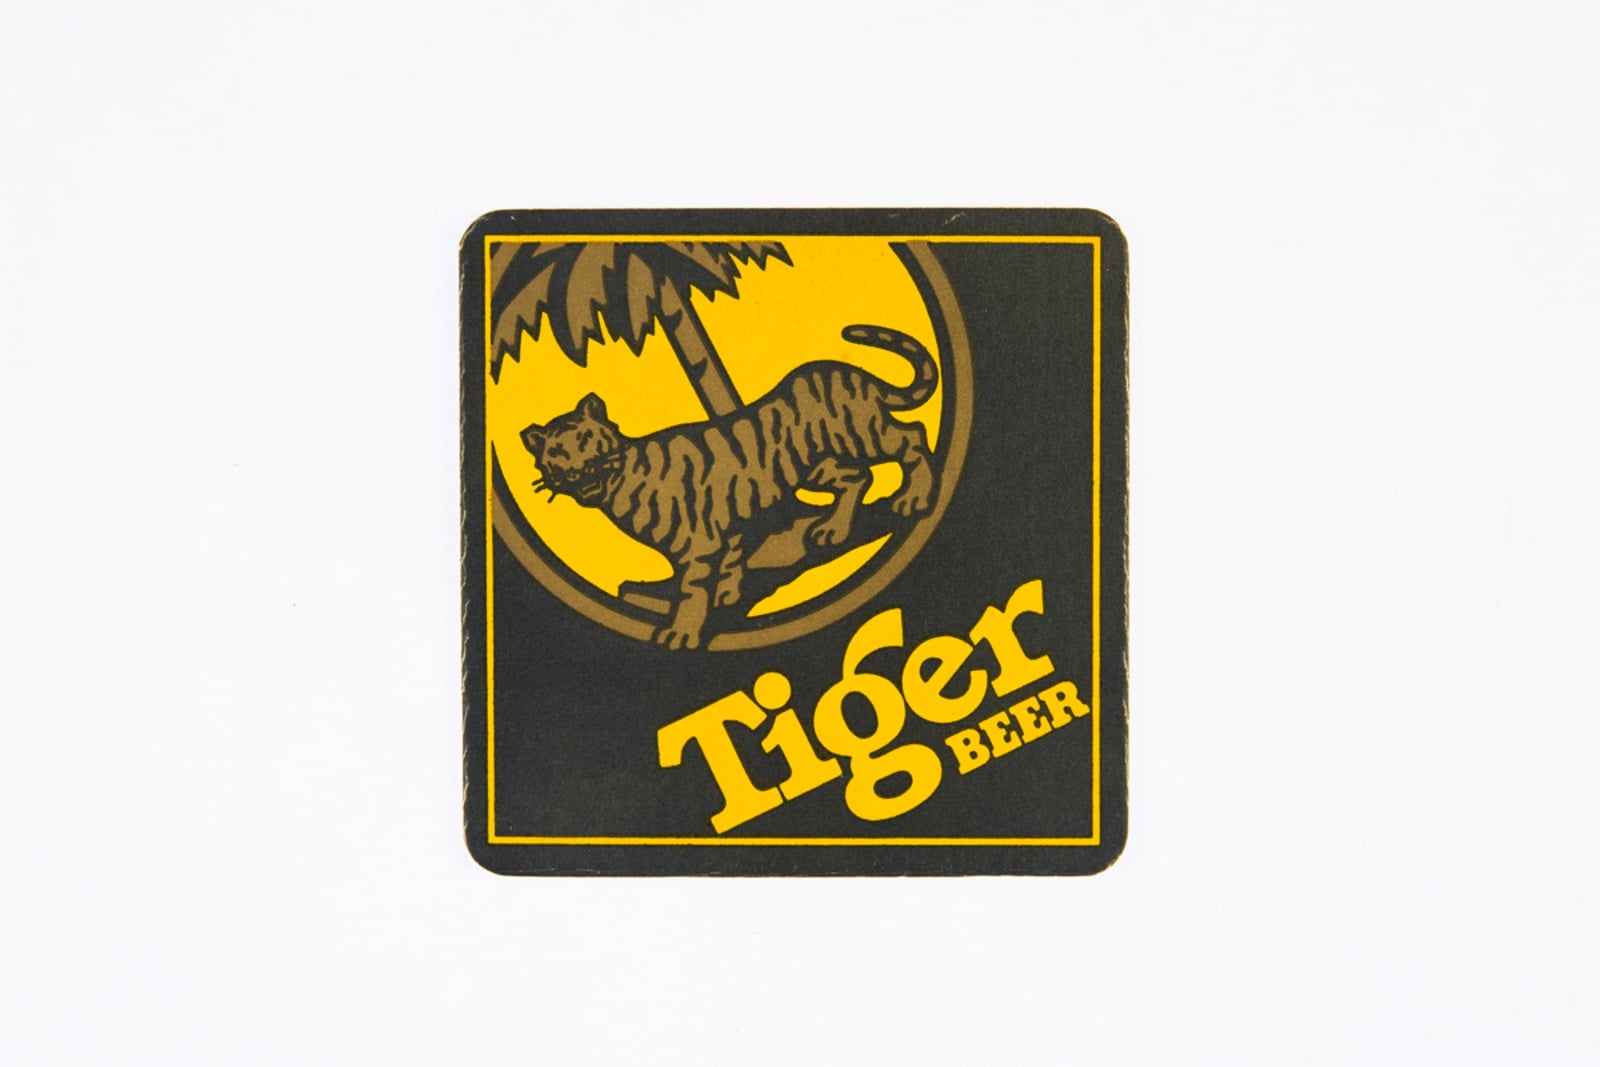 Tiger Beer Square Coaster